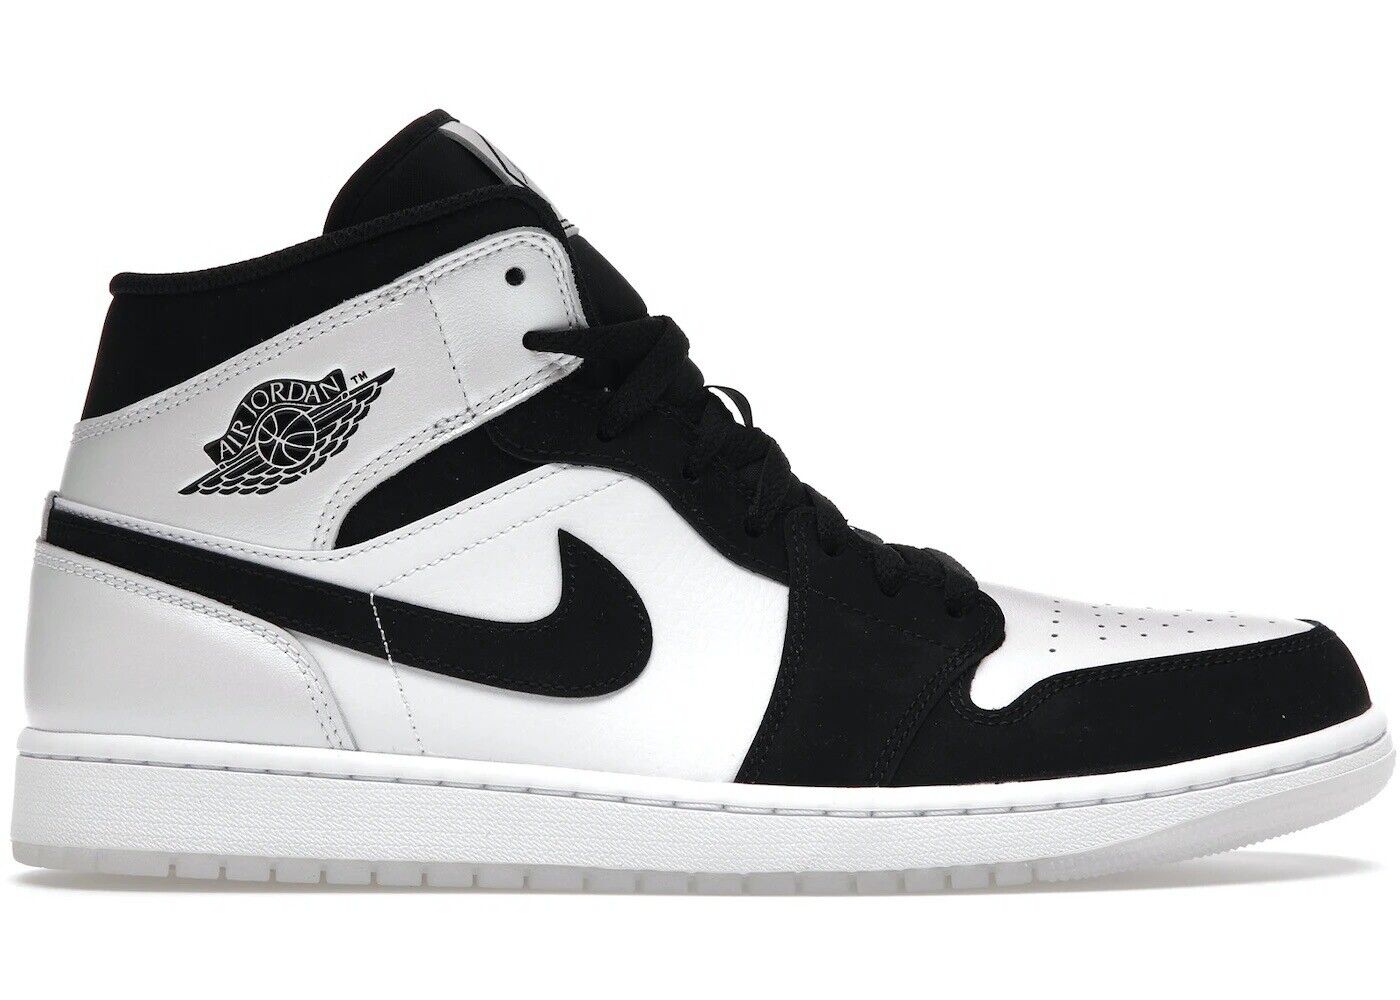 Air Jordan 1 Mid SE 'Diamond' DH6933-100 Men's White/Black Sneaker Shoes B009